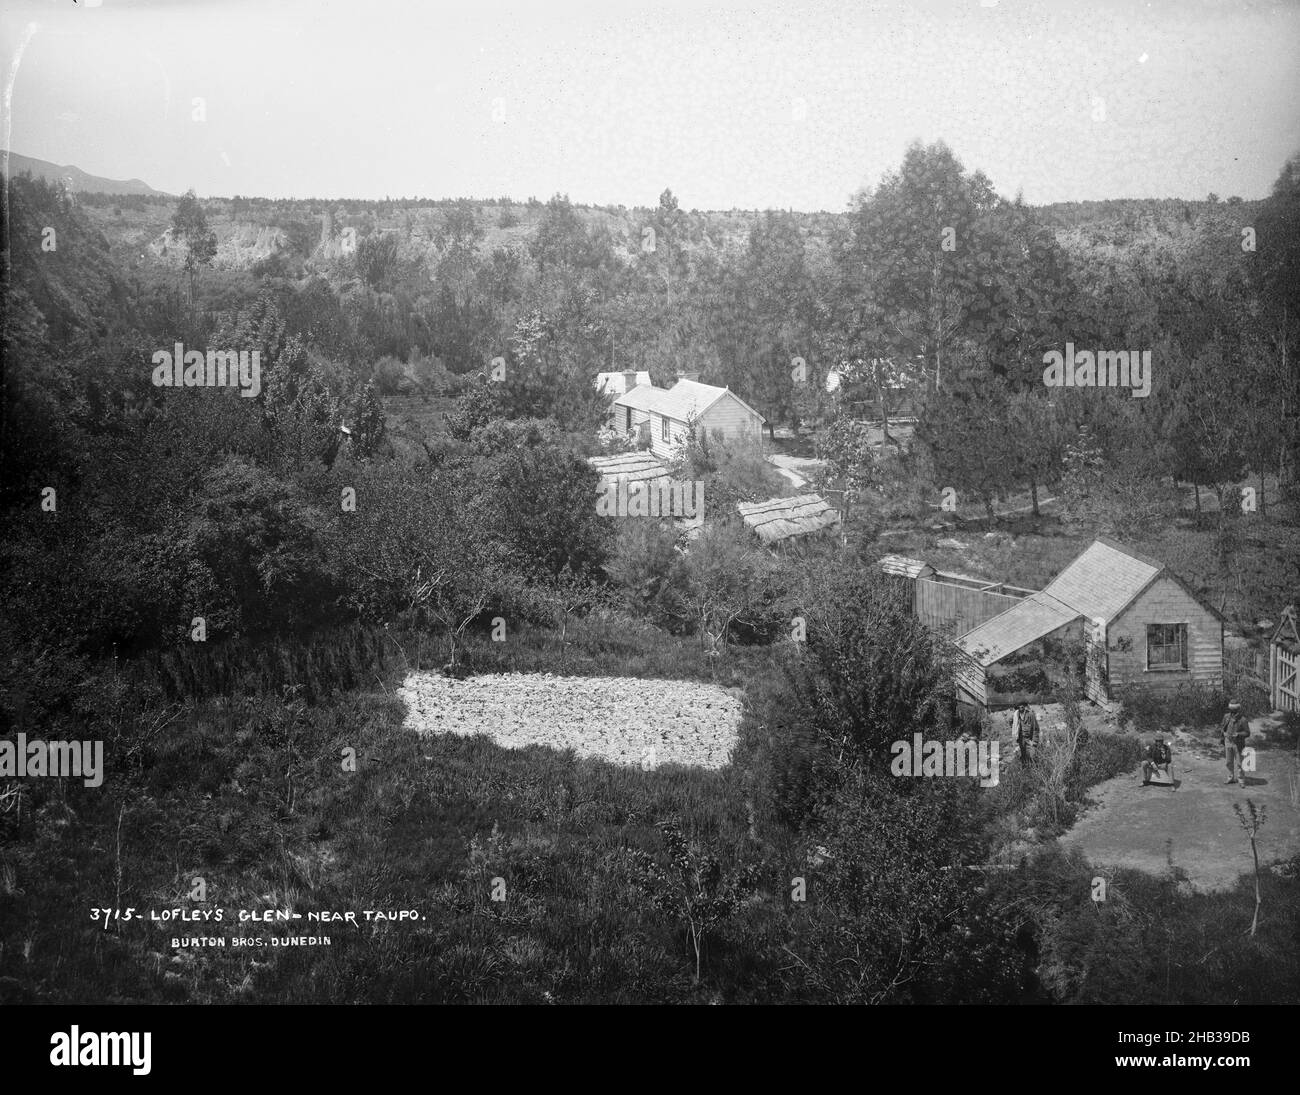 Lofley's Glen near Taupo, Burton Brothers studio, photography studio, New Zealand, black-and-white photography Stock Photo